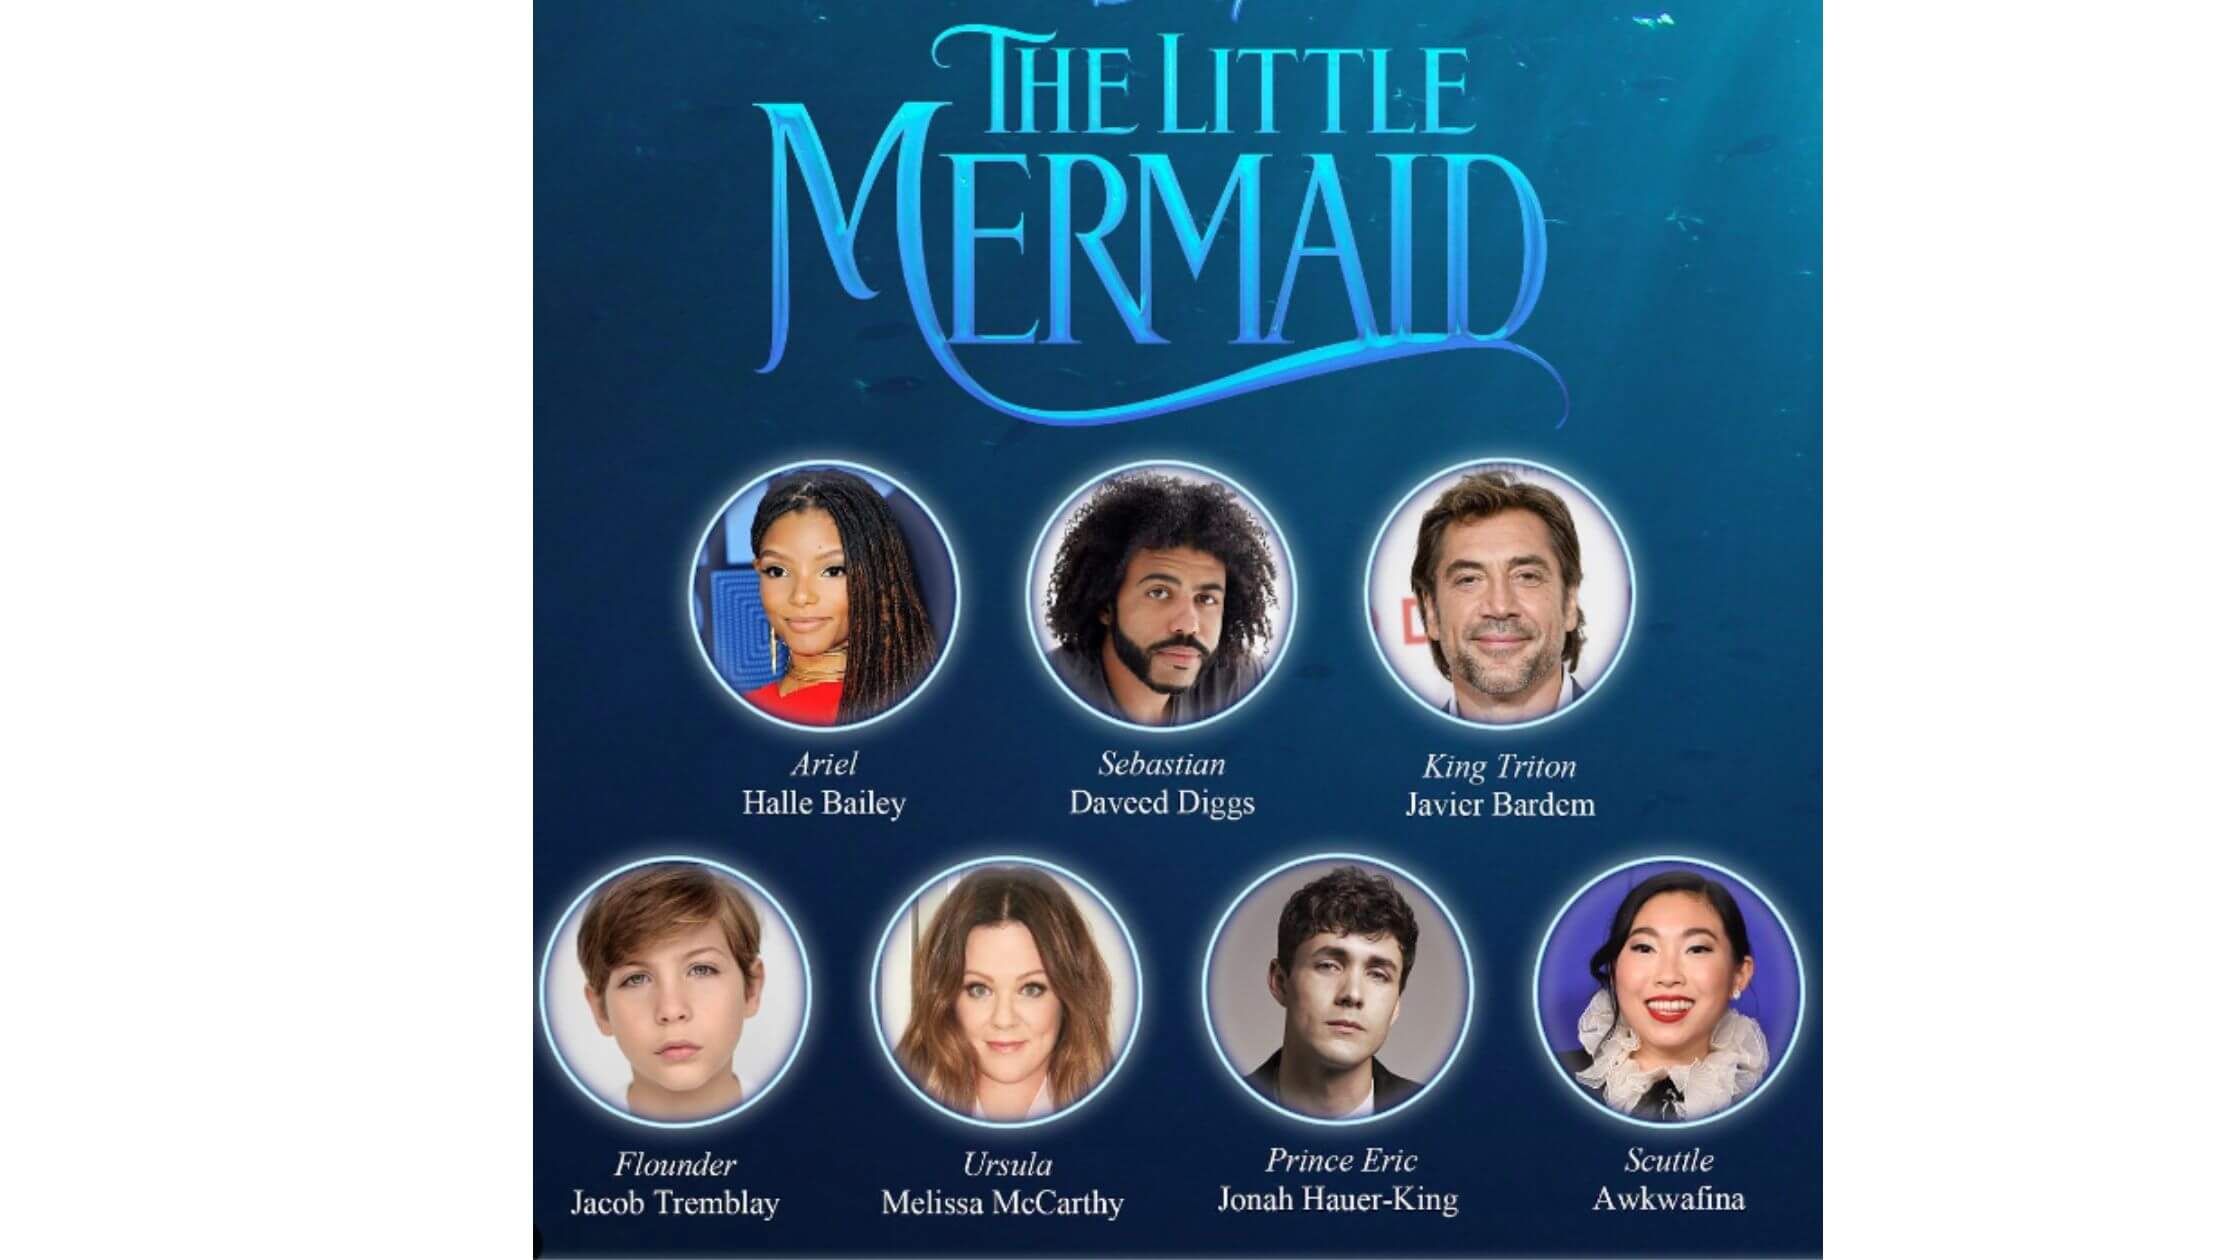 The Little Mermaid Cast
